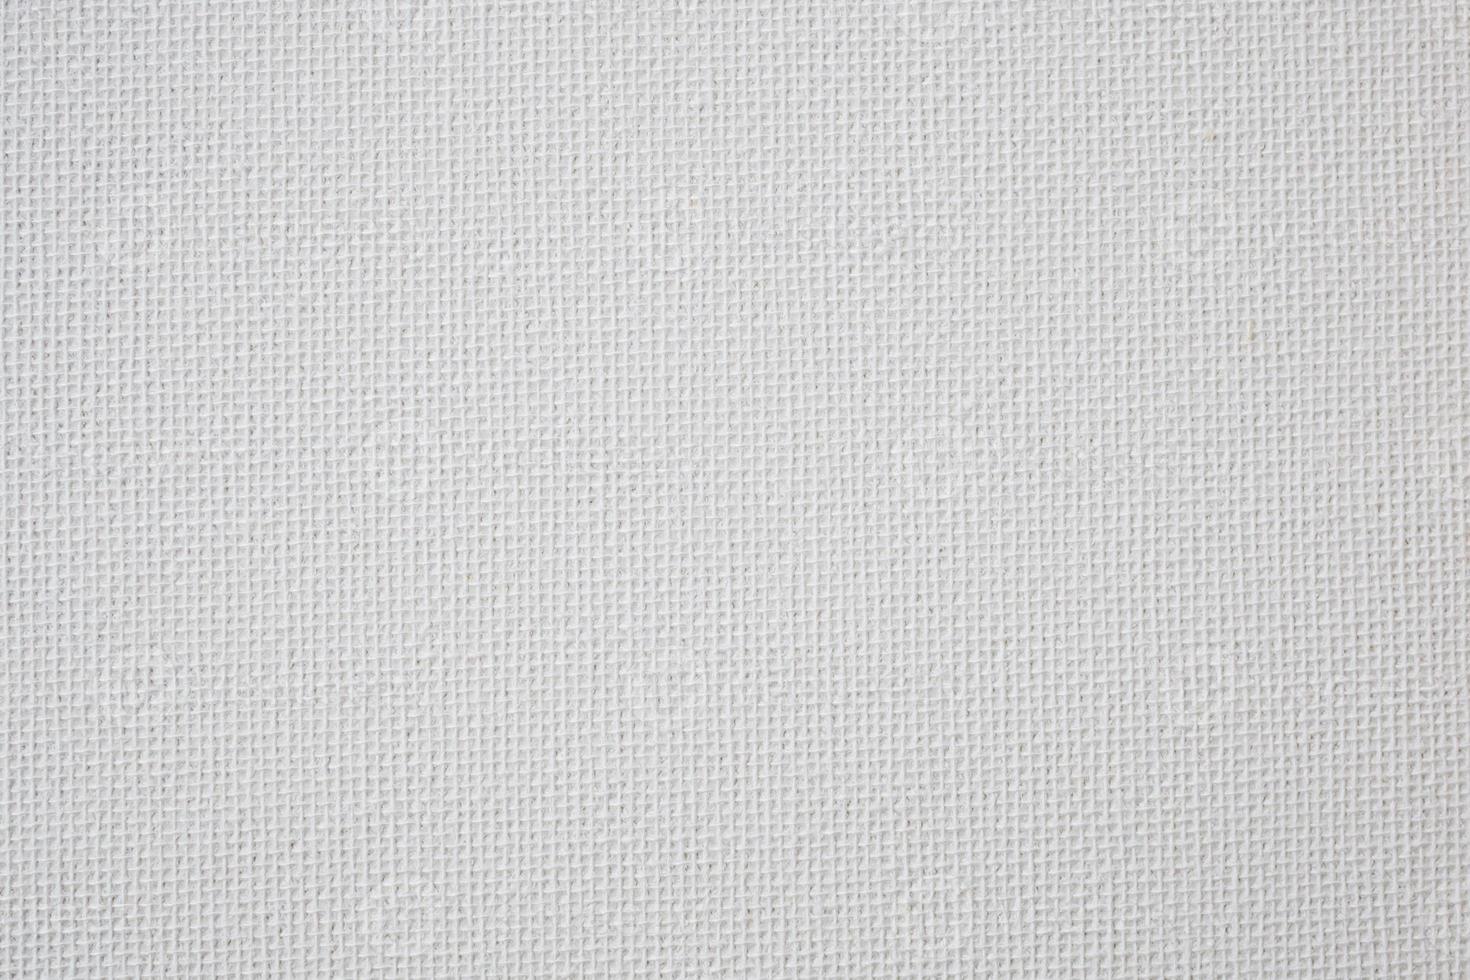 fondo de textura de lienzo blanco 12601621 Foto de stock en Vecteezy